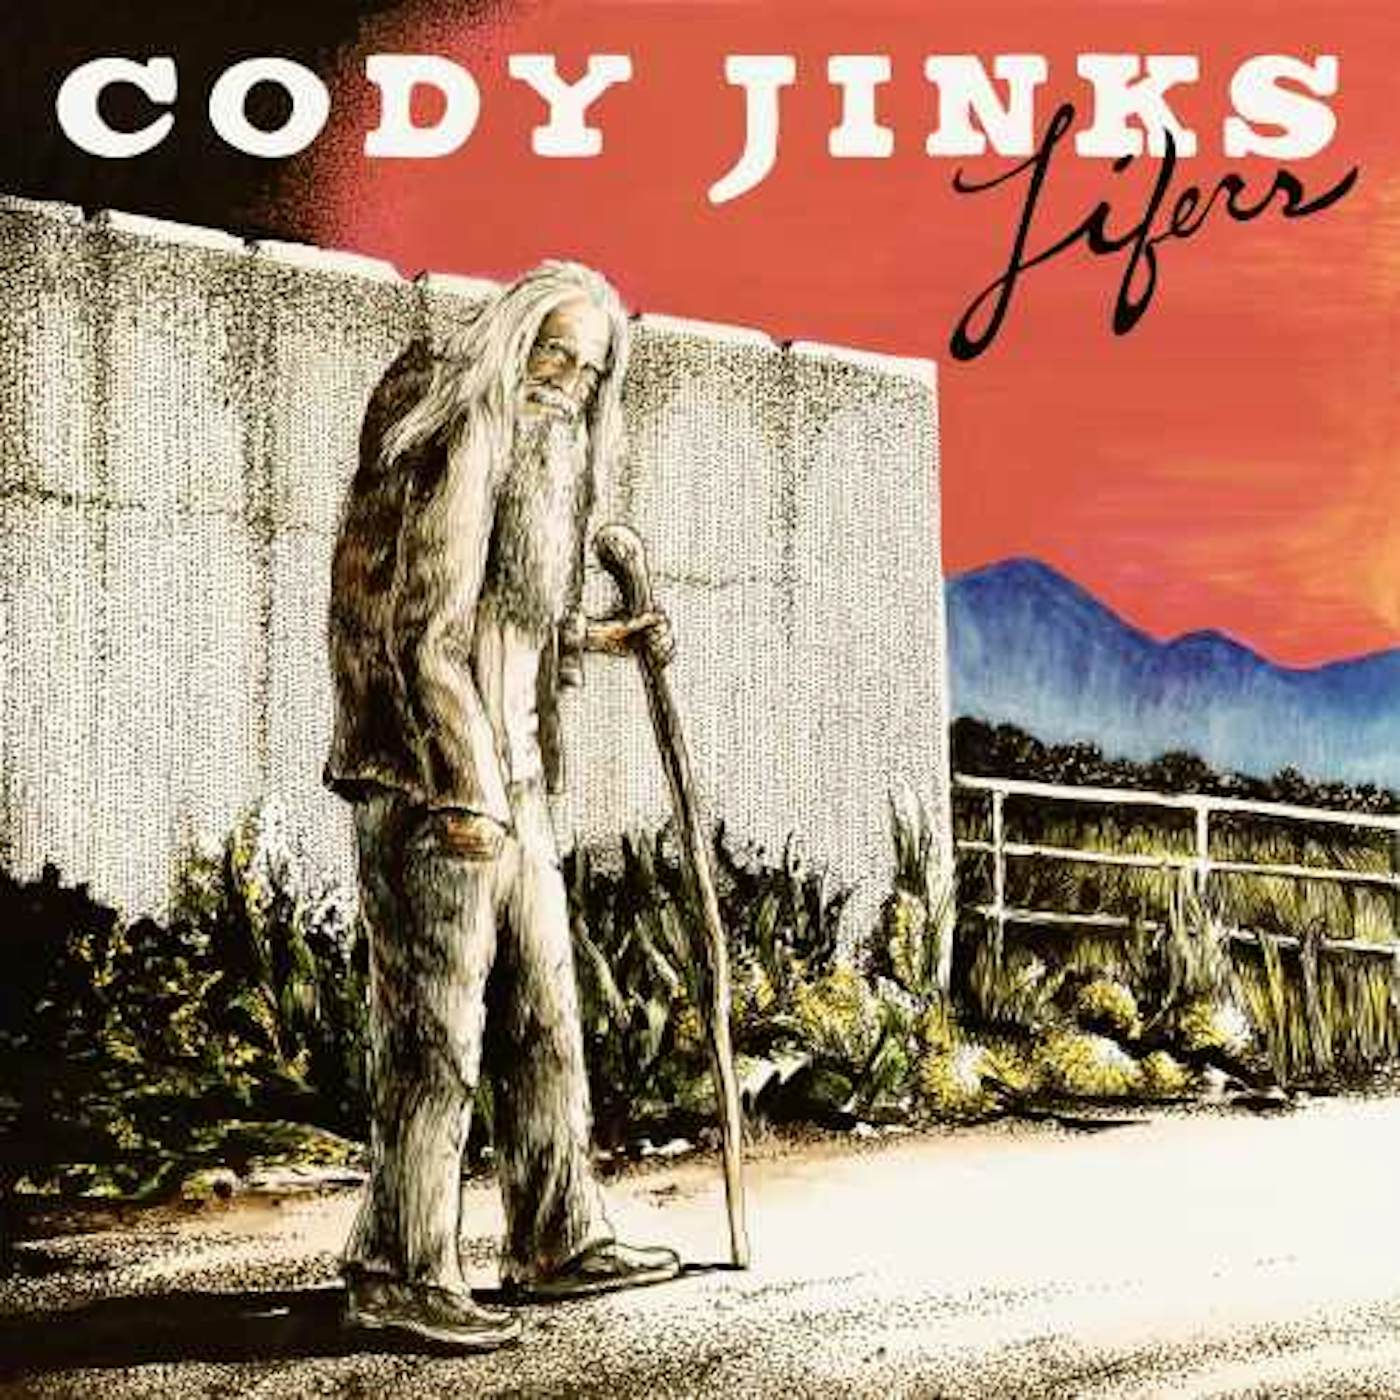 Cody Jinks Lifers Vinyl Record